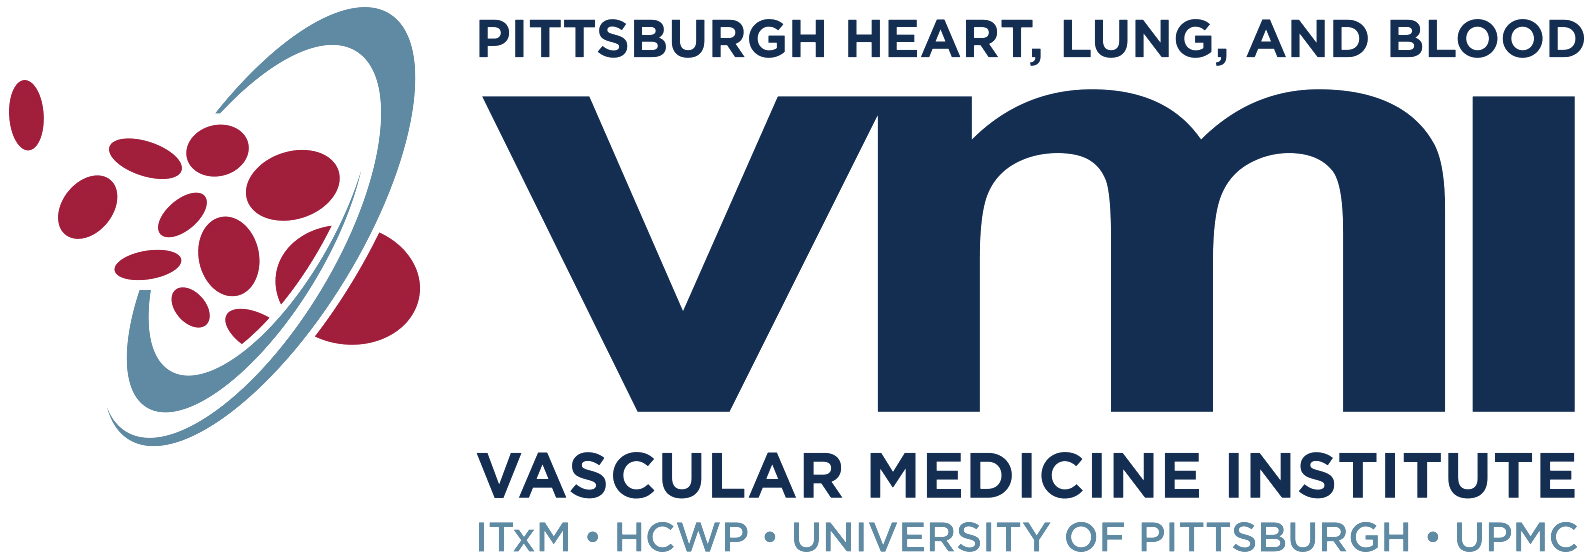 University of Pittsburgh Logo - Vascular Medicine Institute